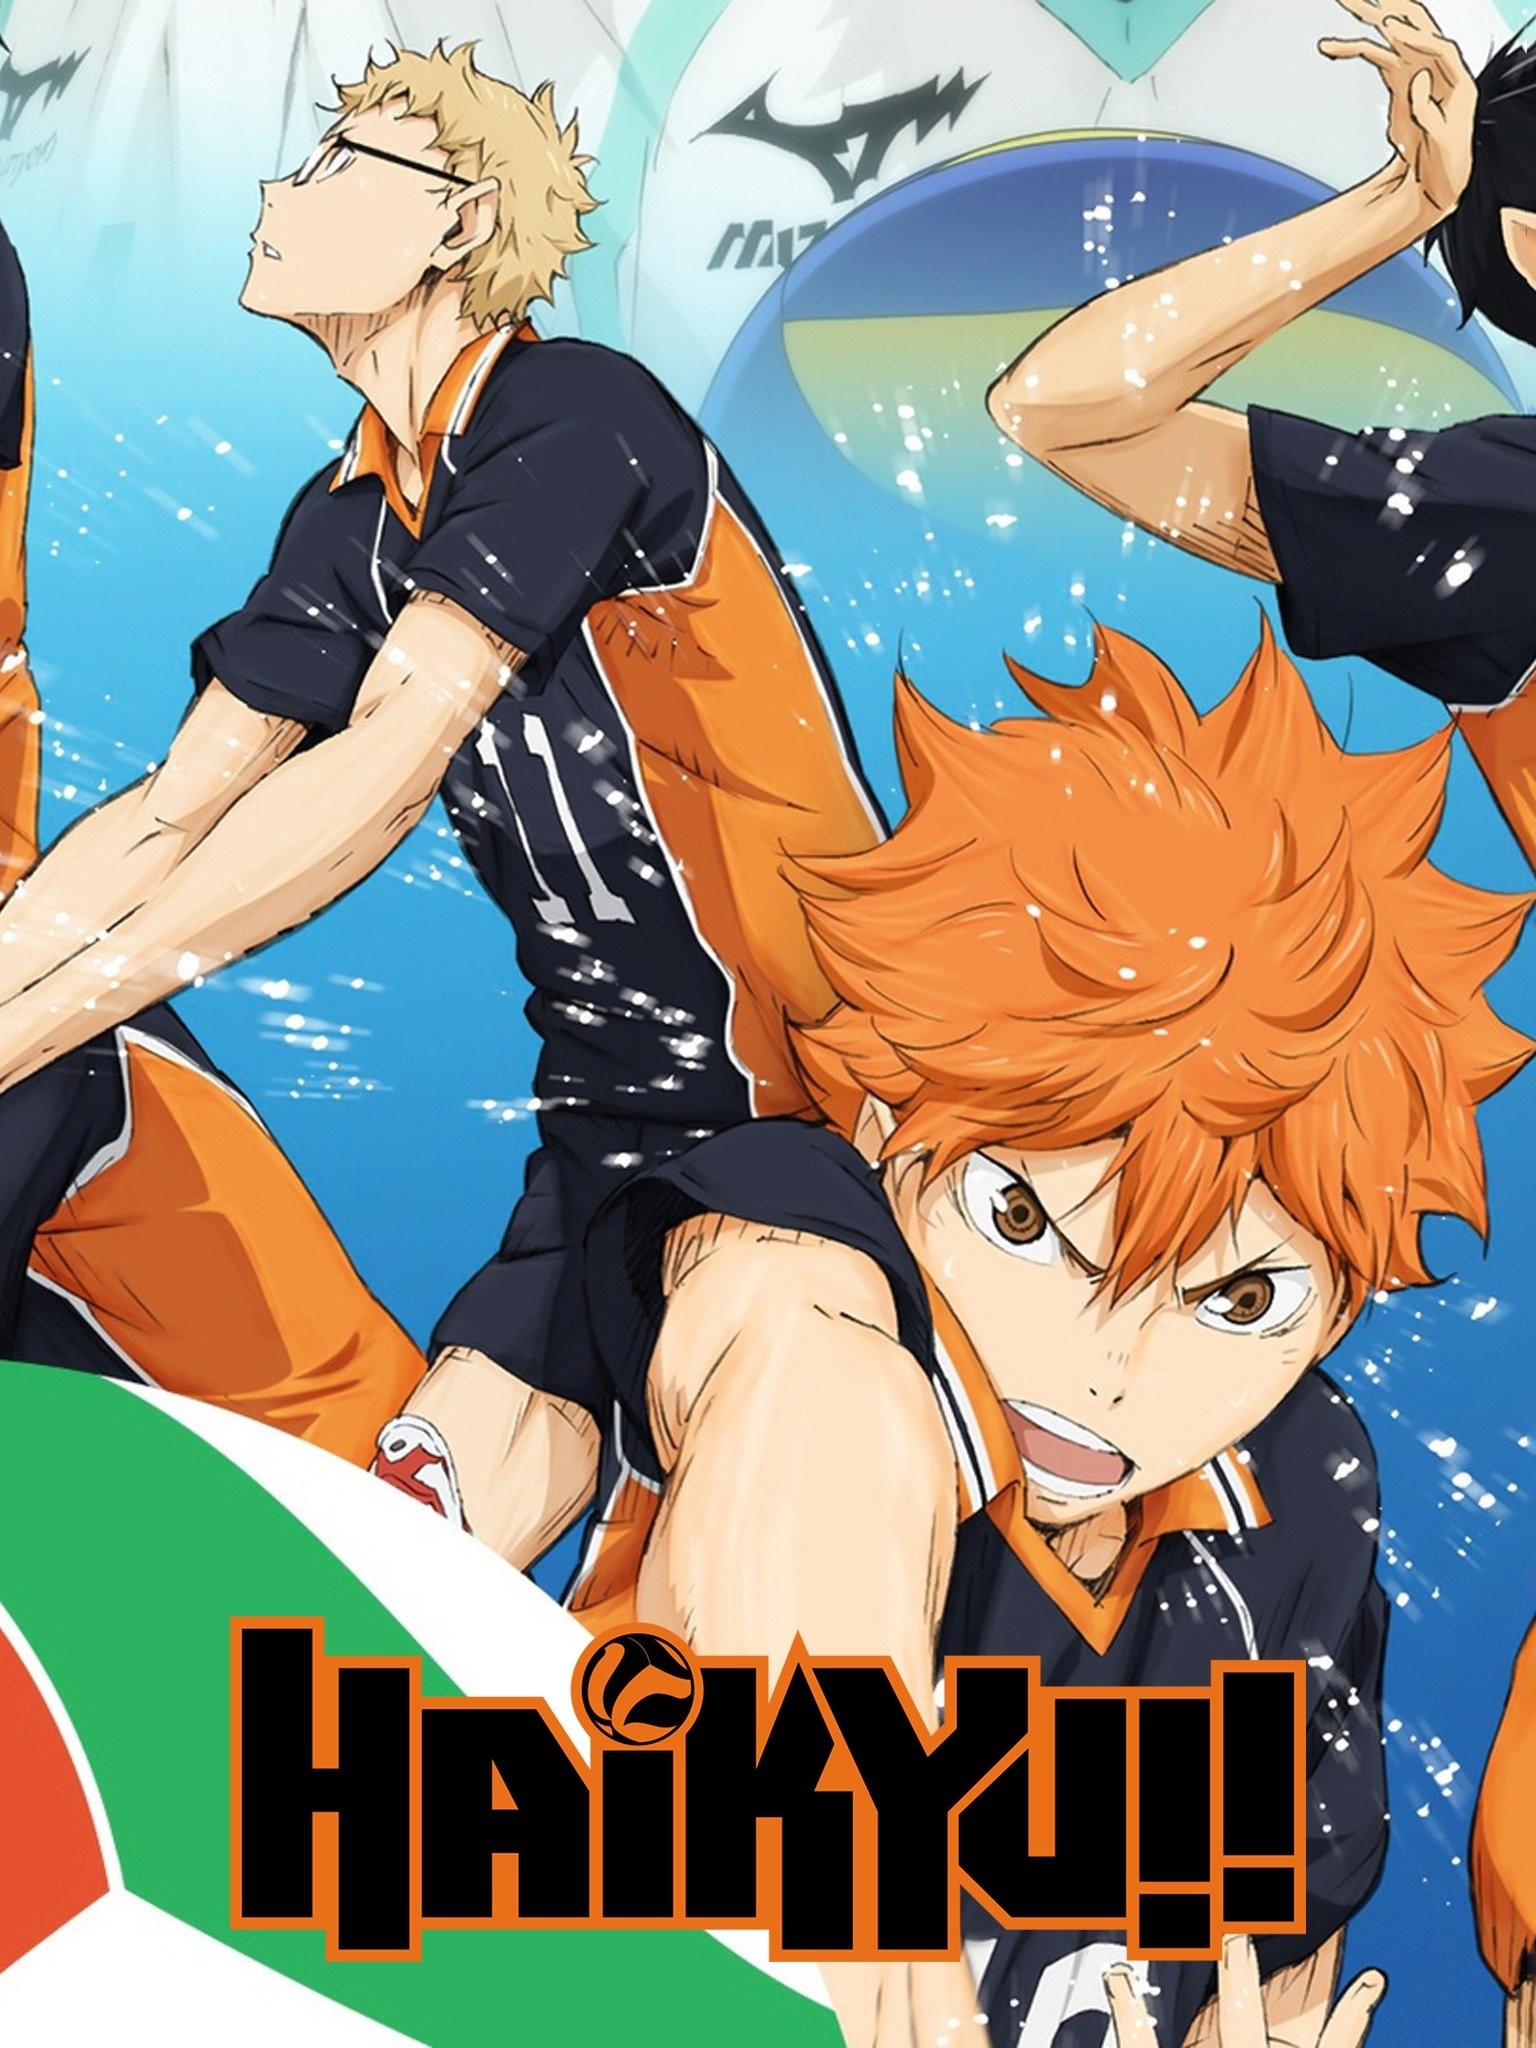 gerFogoo Hot Anime Haikyuu Poster Anime Character Poster Sport Volleyball  Hanging Painting Wall Art DecorH01  Amazonin Home  Kitchen